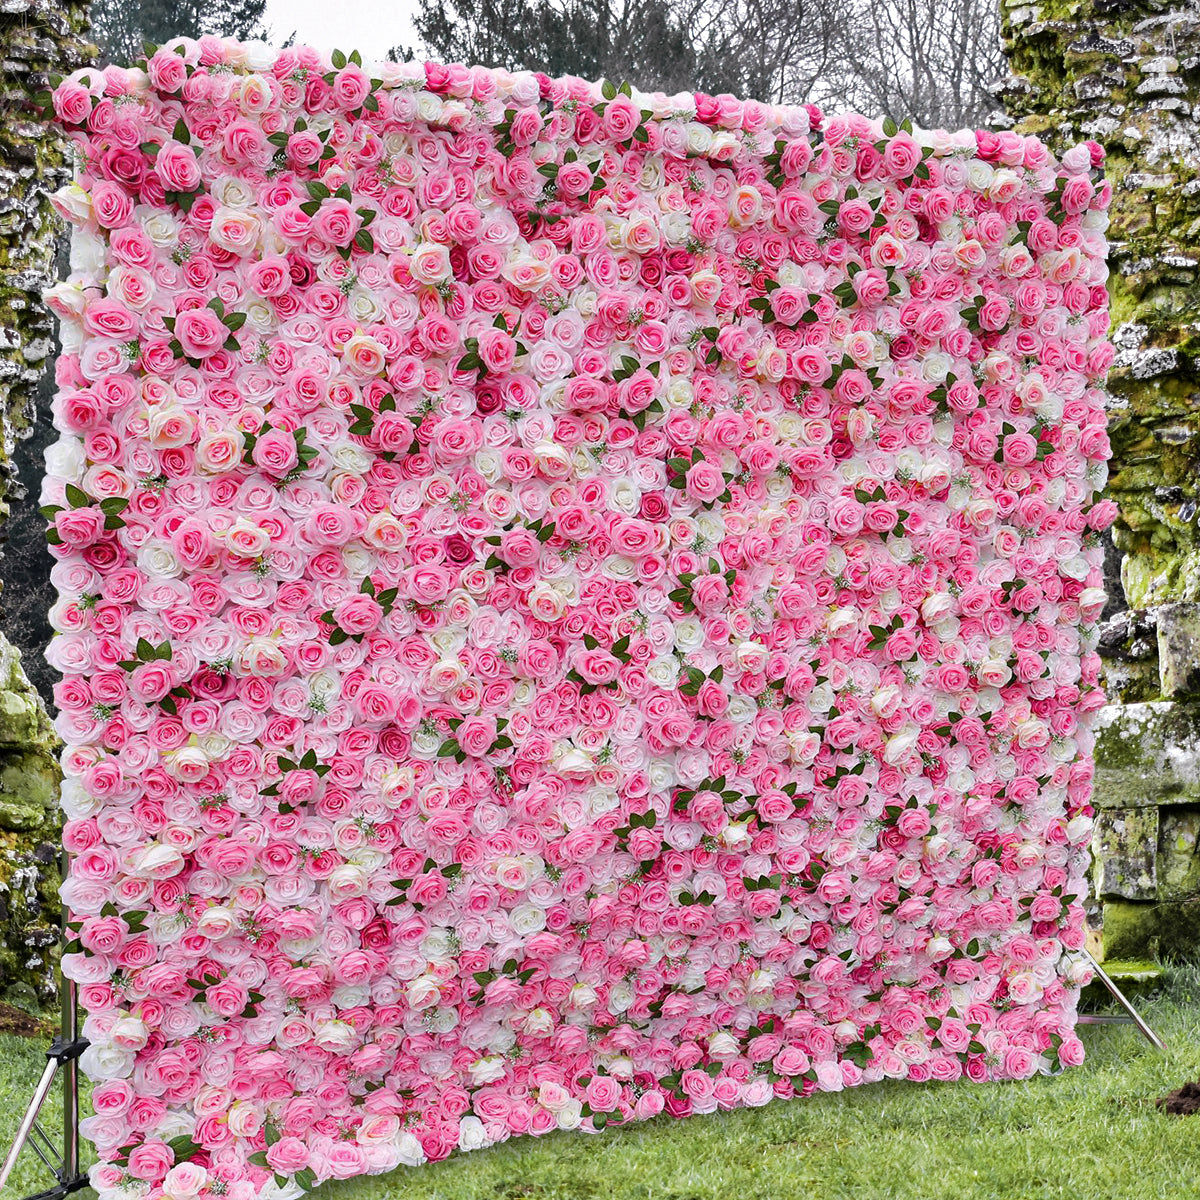 3D Artificial Flower Wall Arrangement Wedding Party Birthday Backdrop Decor HQ9015